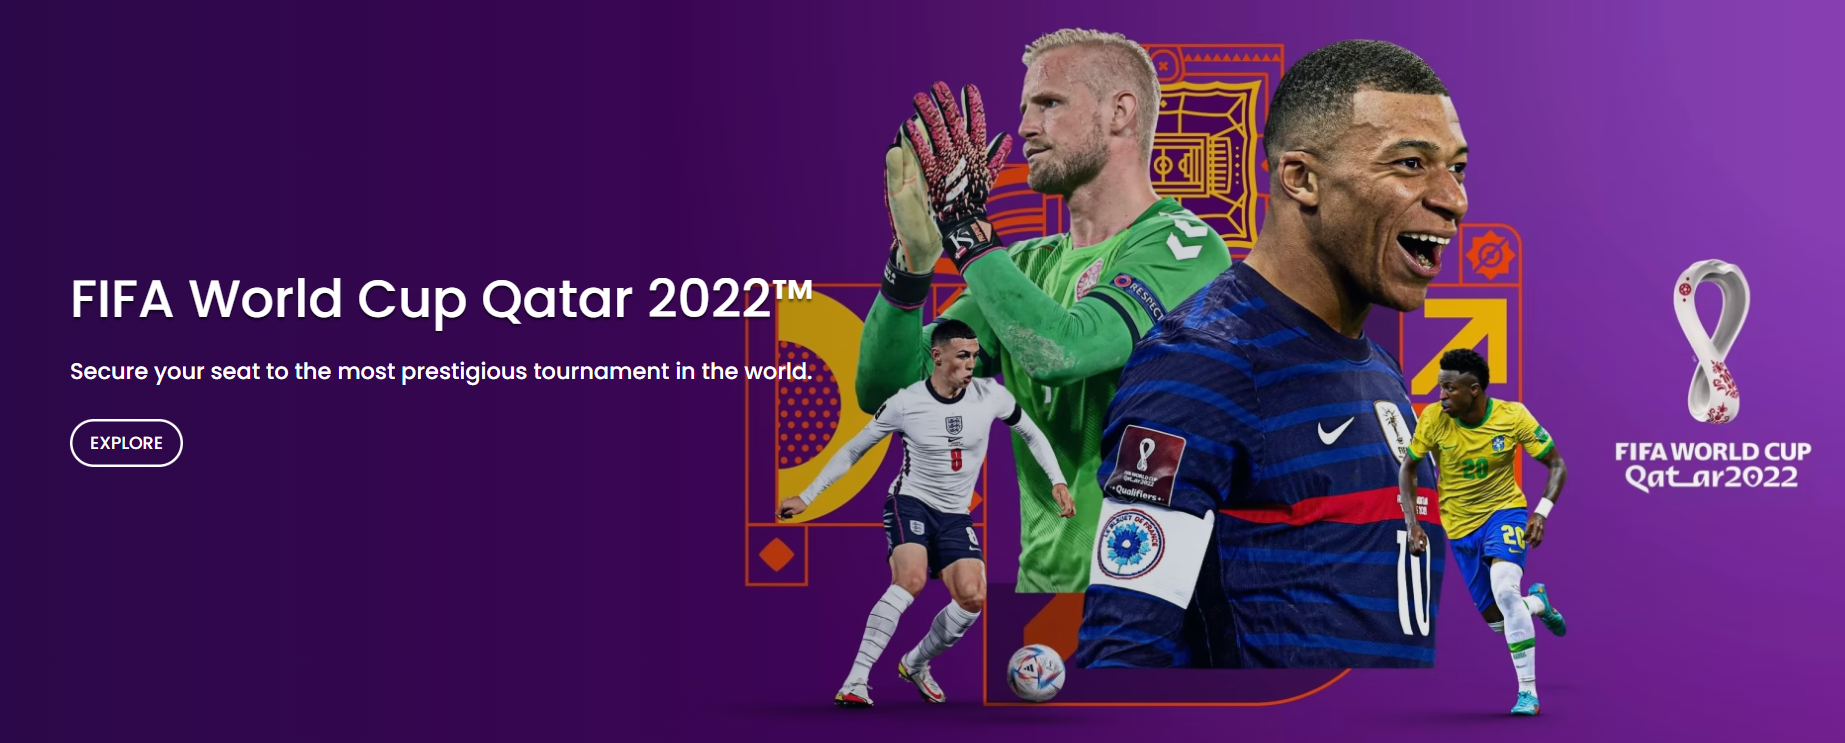 FIFA World Cup Qatar 2022 ticket sales reach 2.45 million